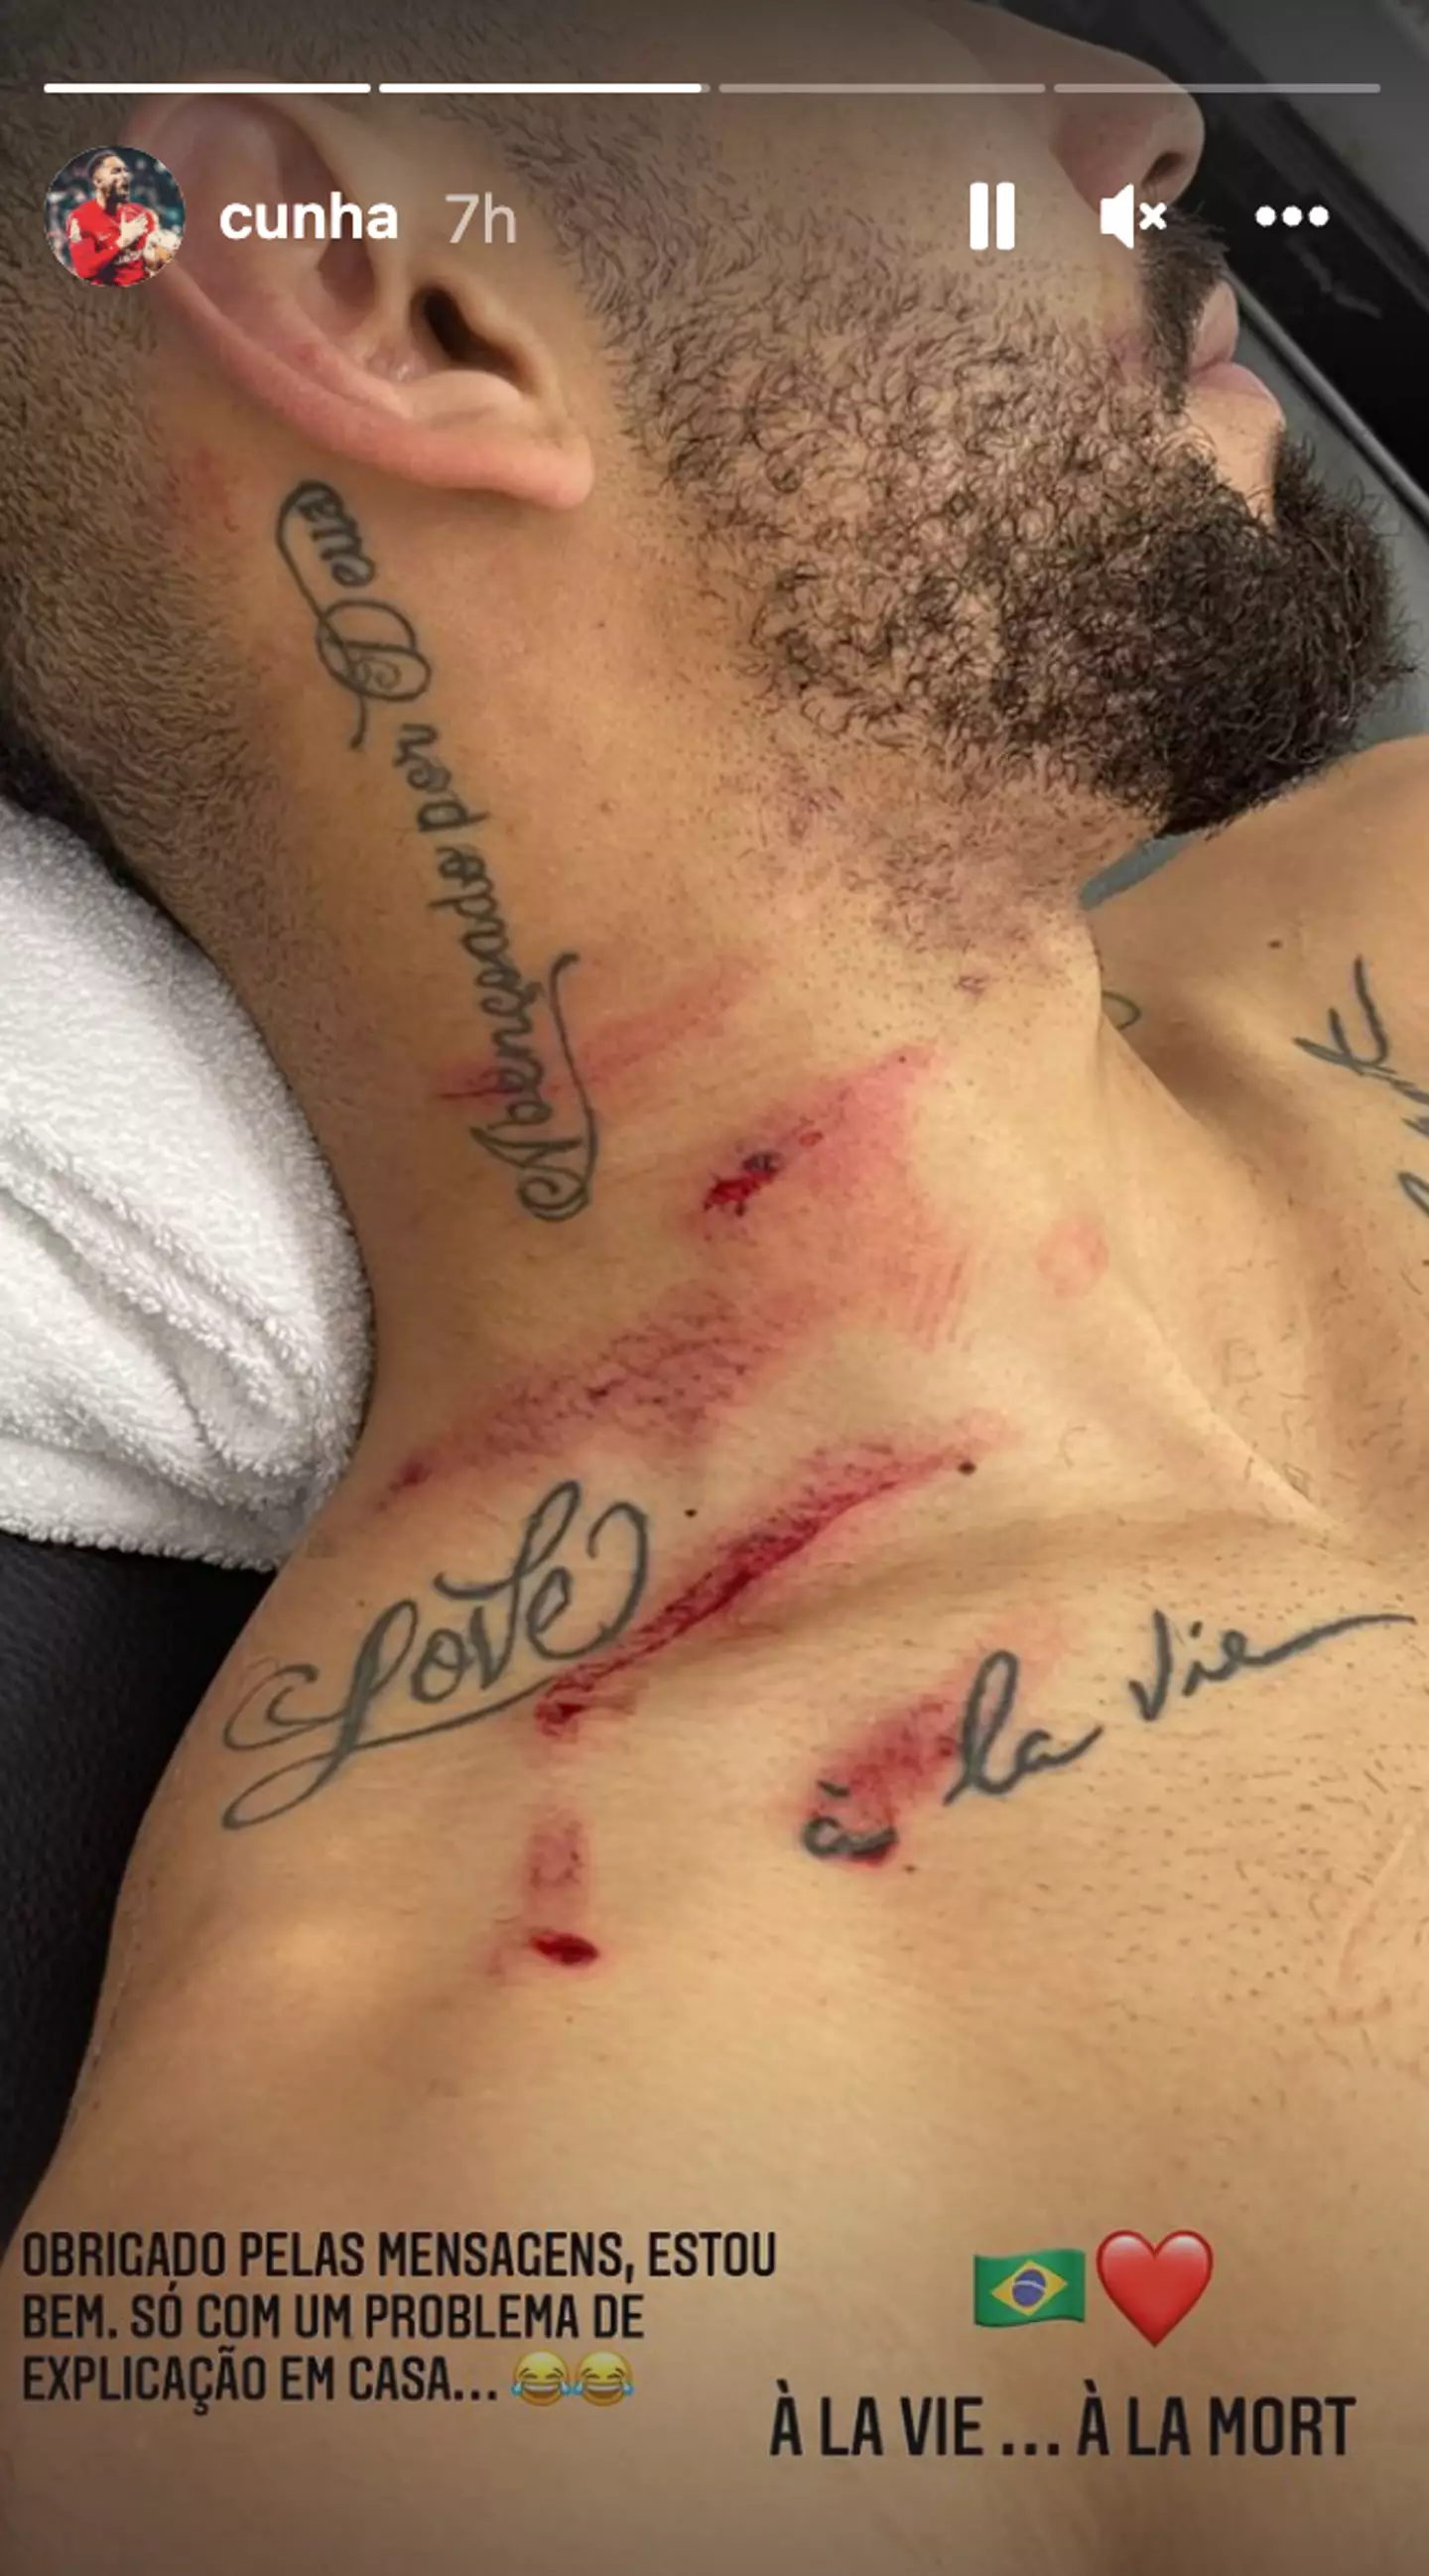 Cunha certainly took a nasty kick. Image: Instagram